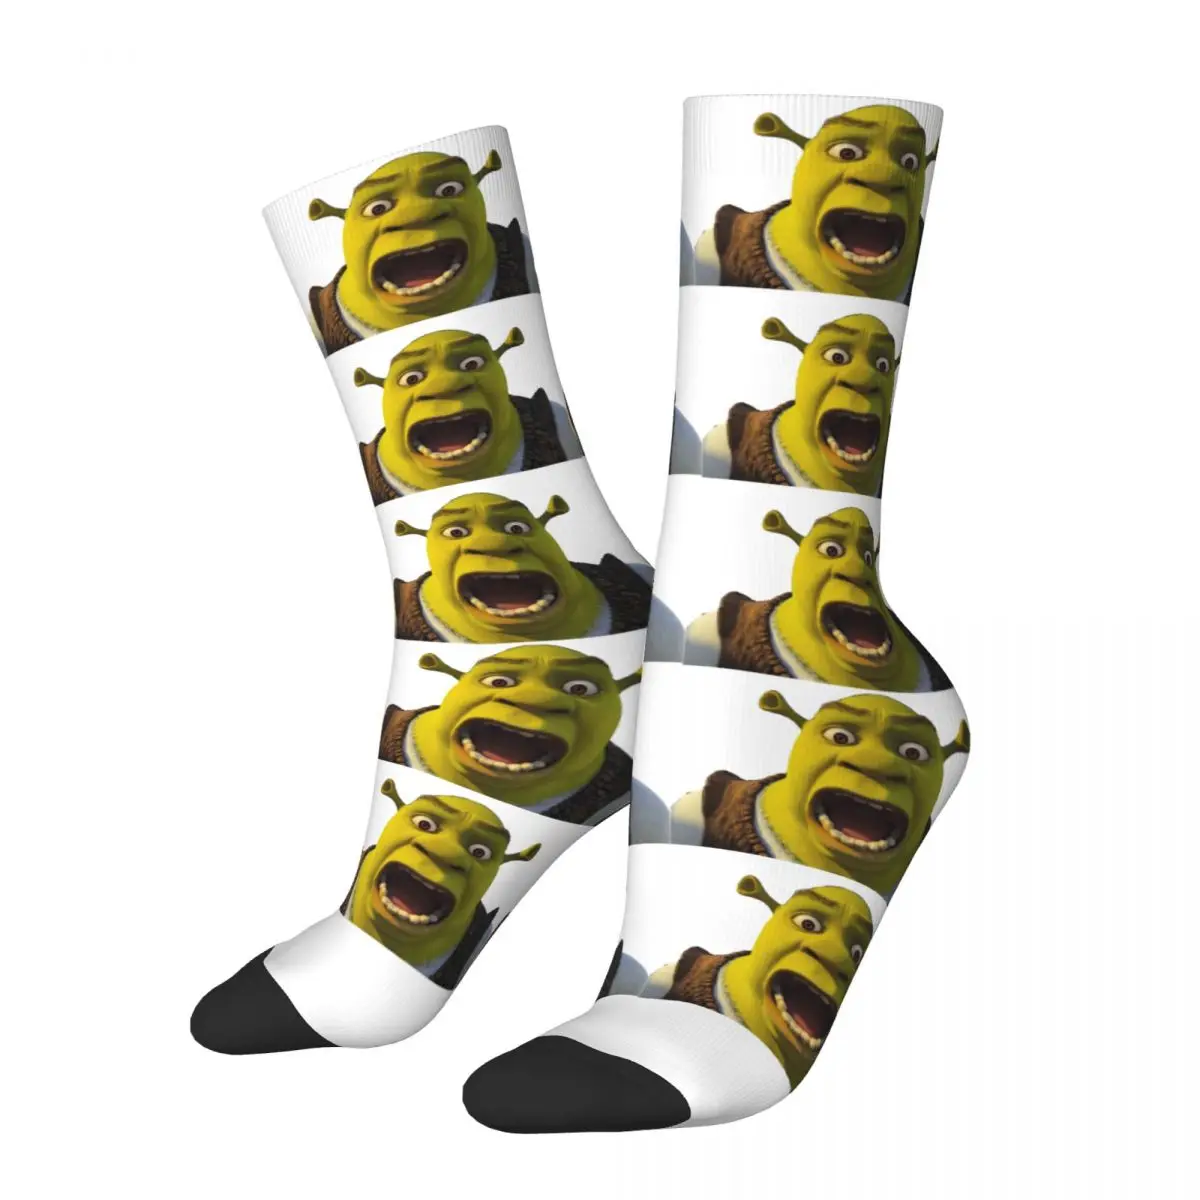 

Funny Happy Men's Socks Surprised Vintage Harajuku Shrek Film Hip Hop Novelty Seamless Crew Crazy Sock Gift Pattern Printed